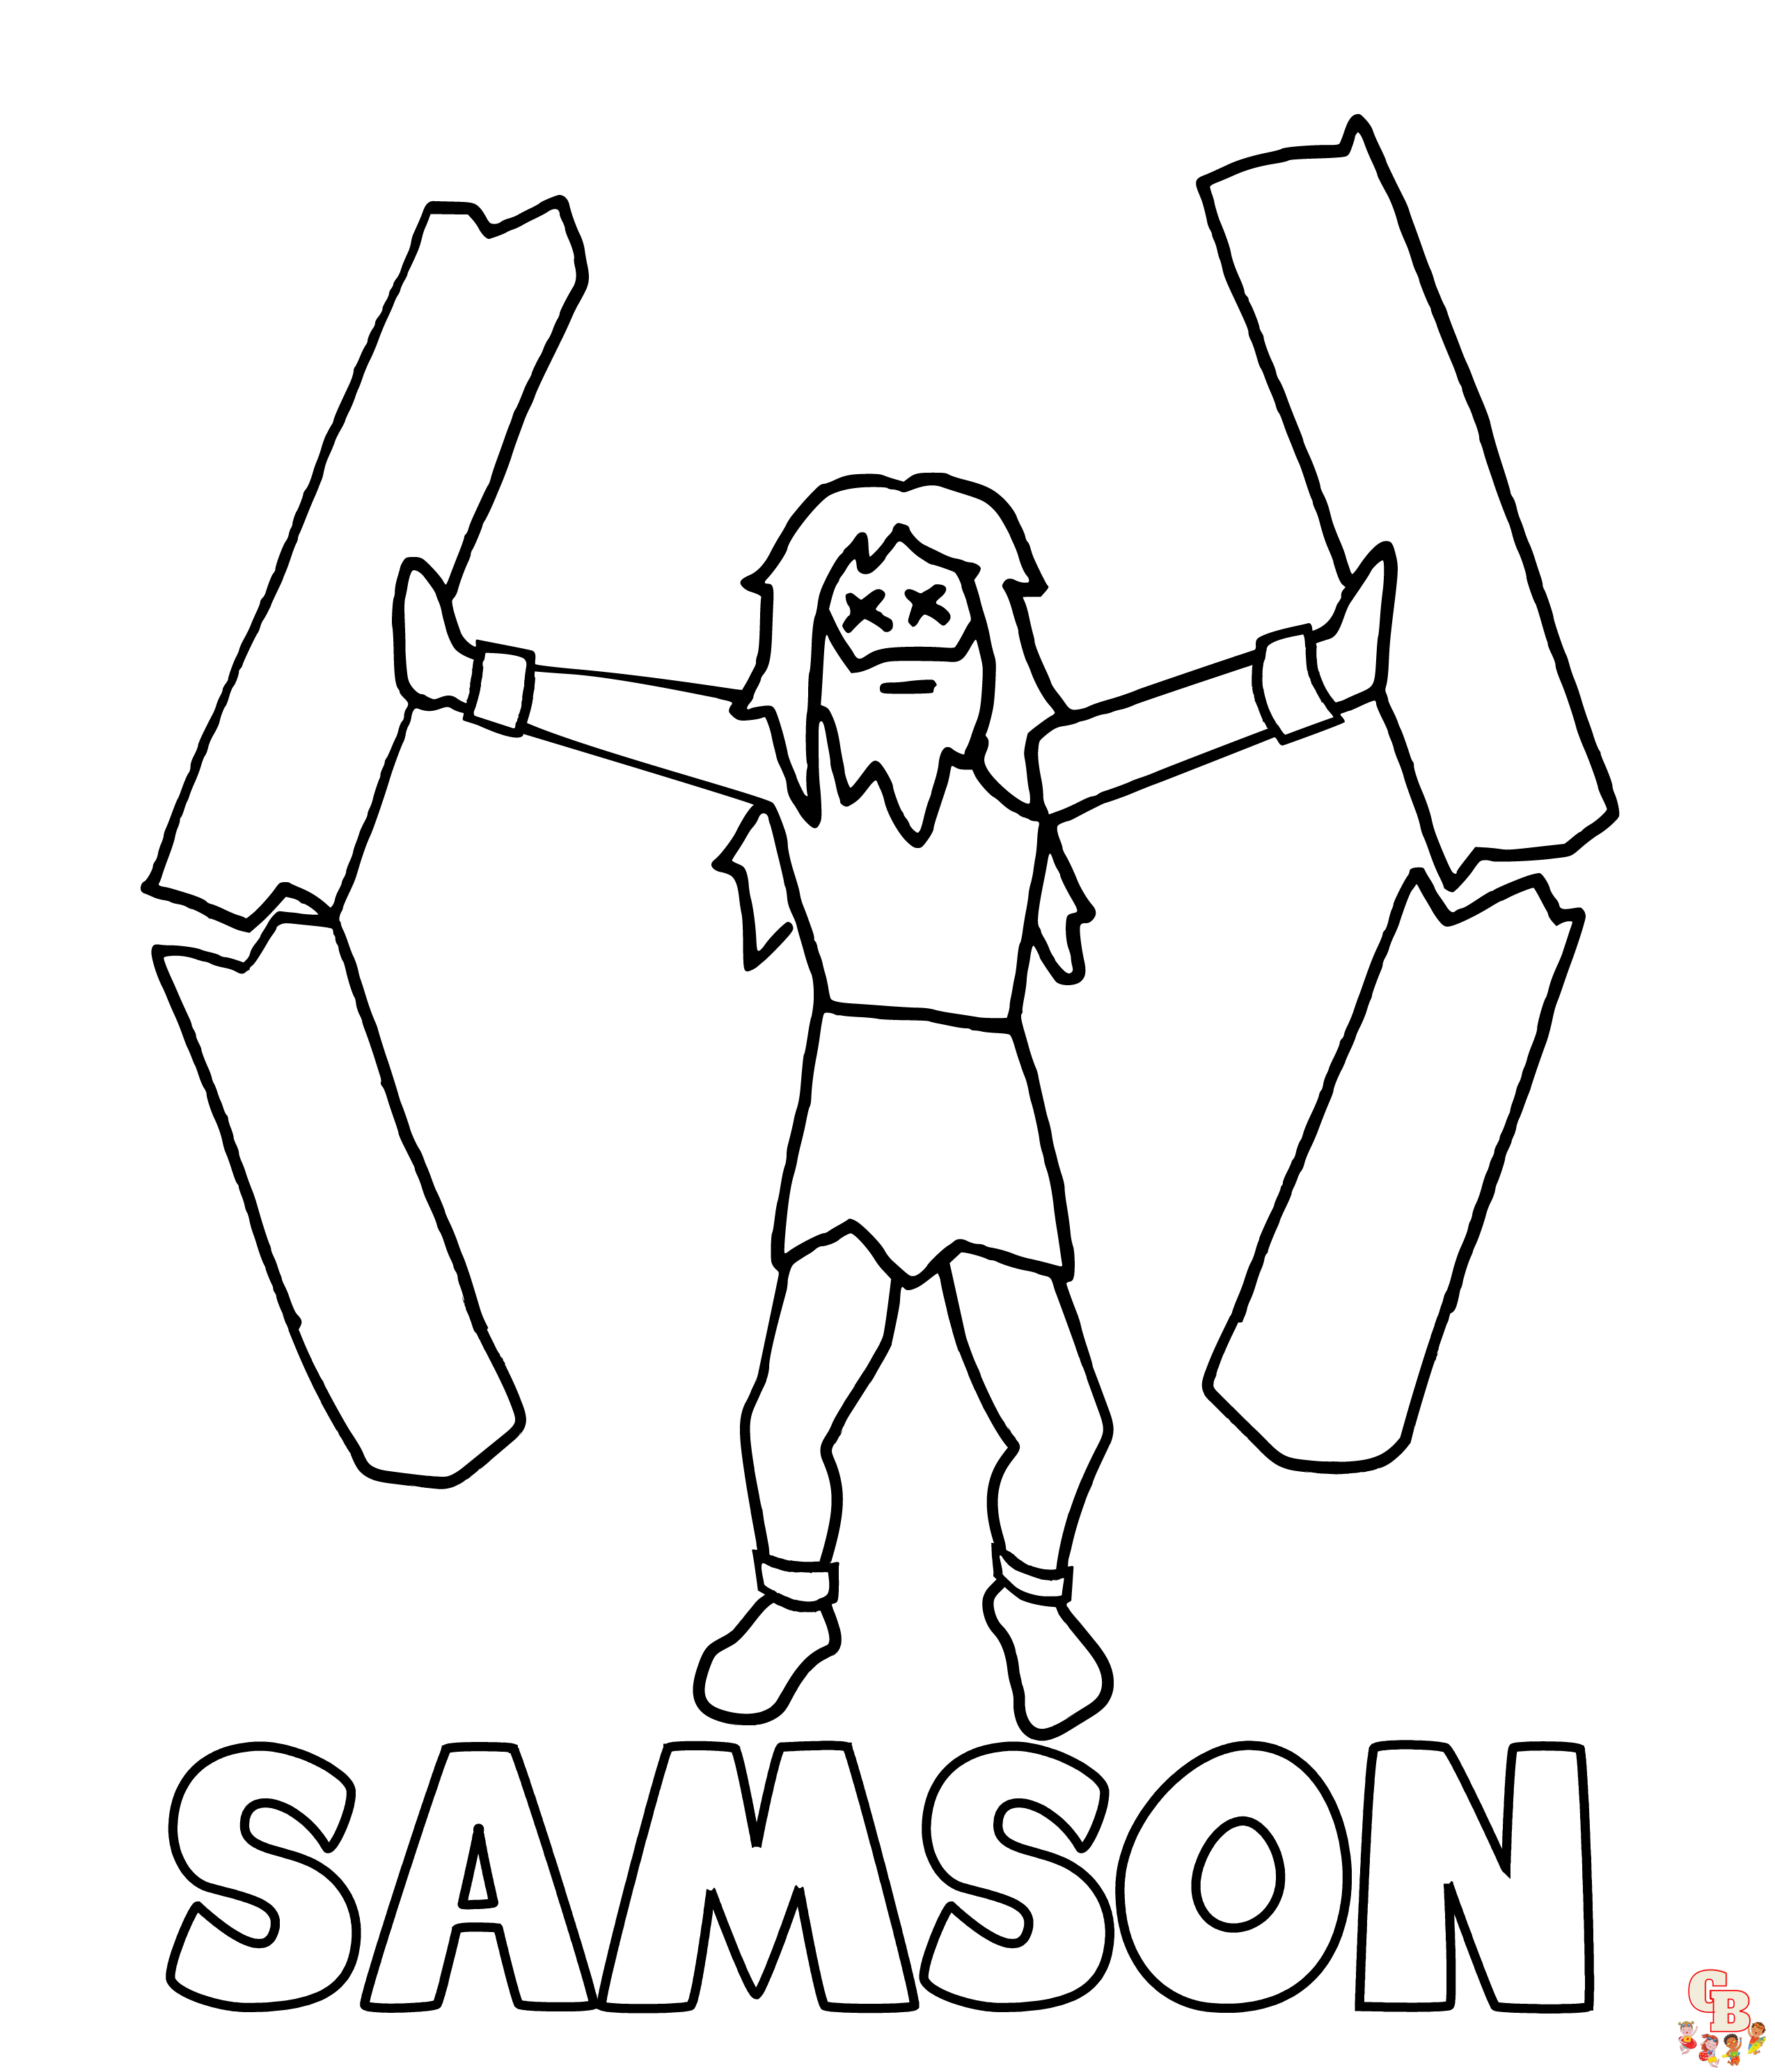 Printable Samson coloring sheets